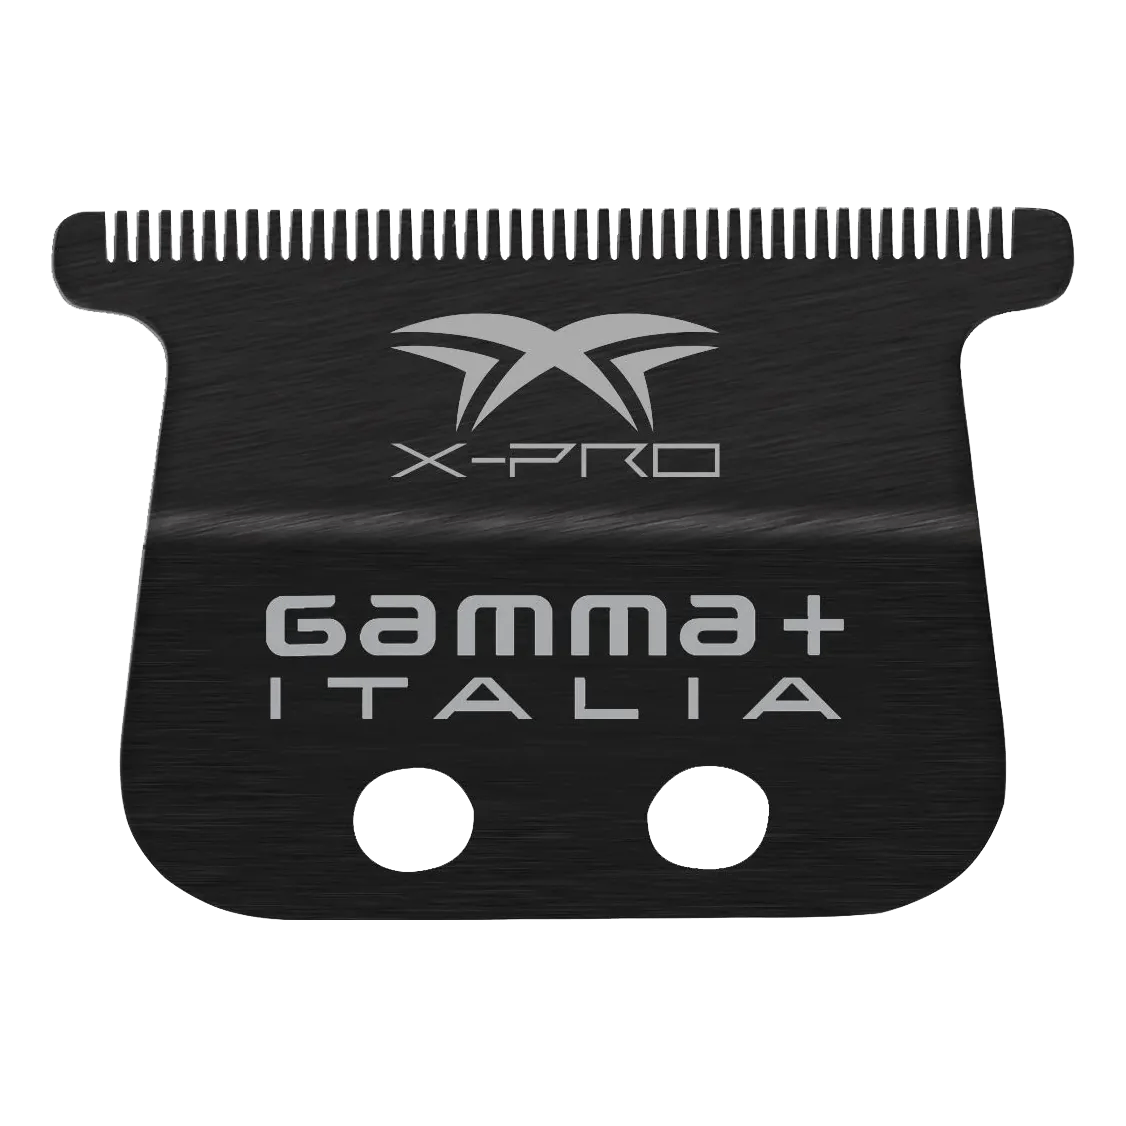 Gamma + Guard til trimmer X-Pro DLC